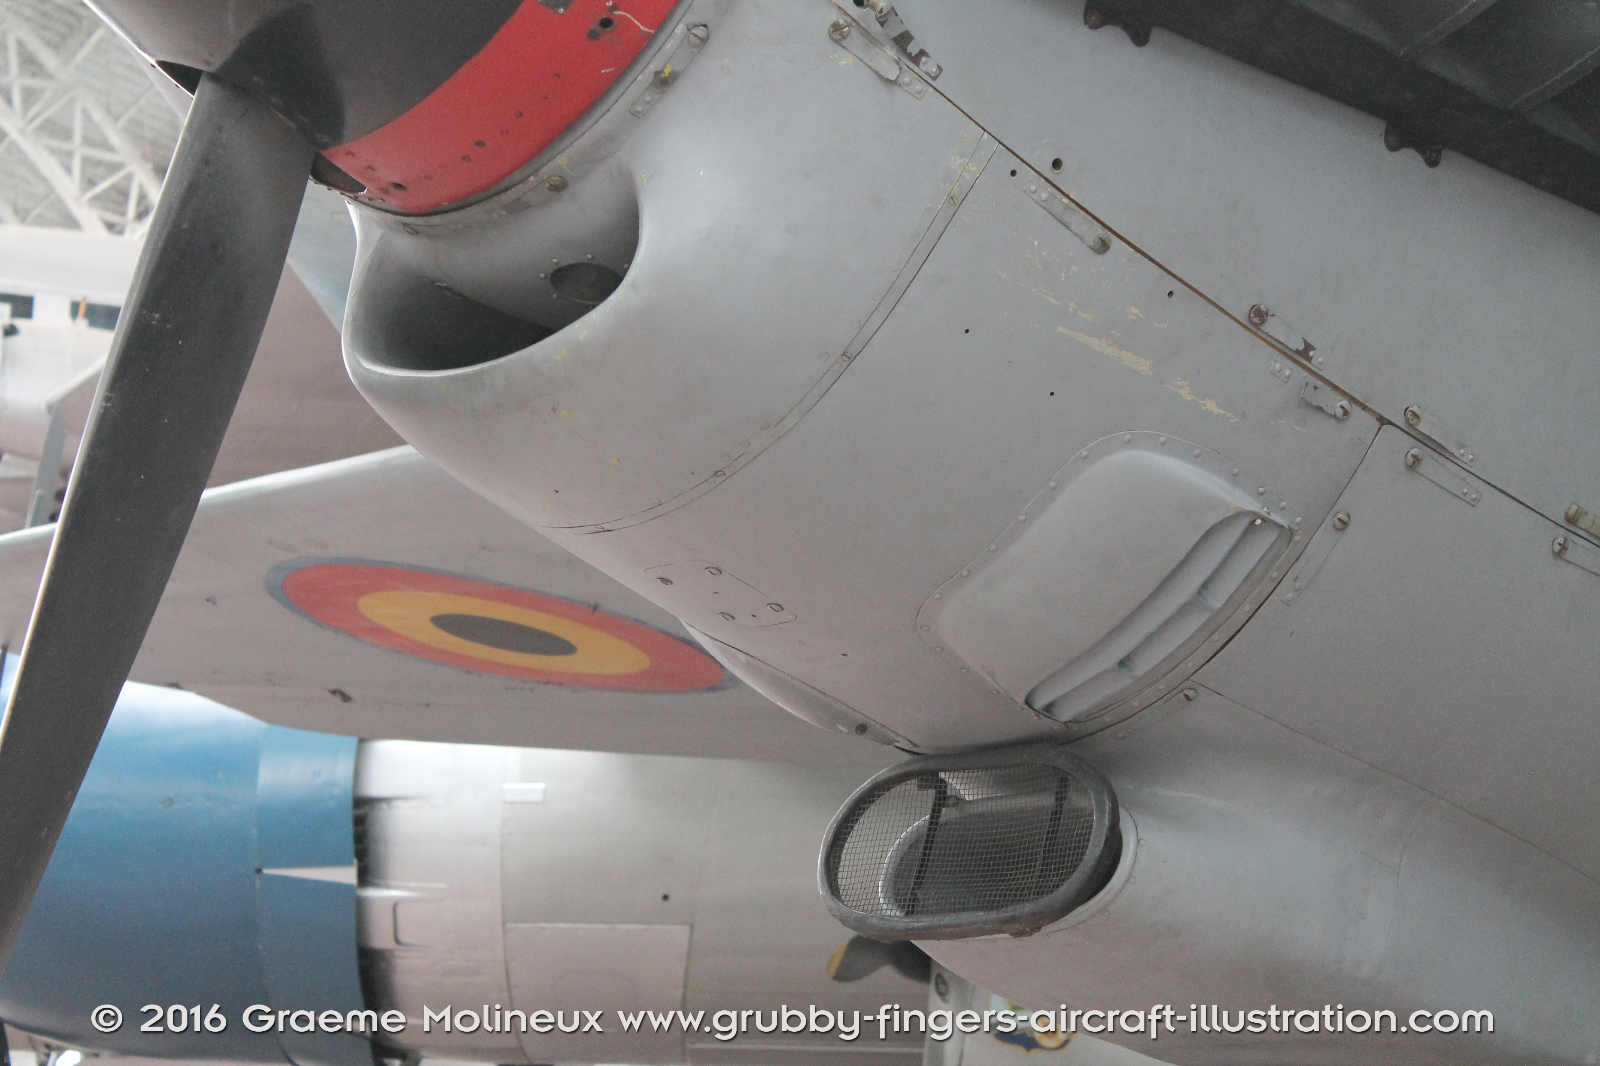 de_Havilland_Mosquito_Walkaround_Mk30_MB-42_Belgian_Air_Force_Museum_2015_16_GraemeMolineux